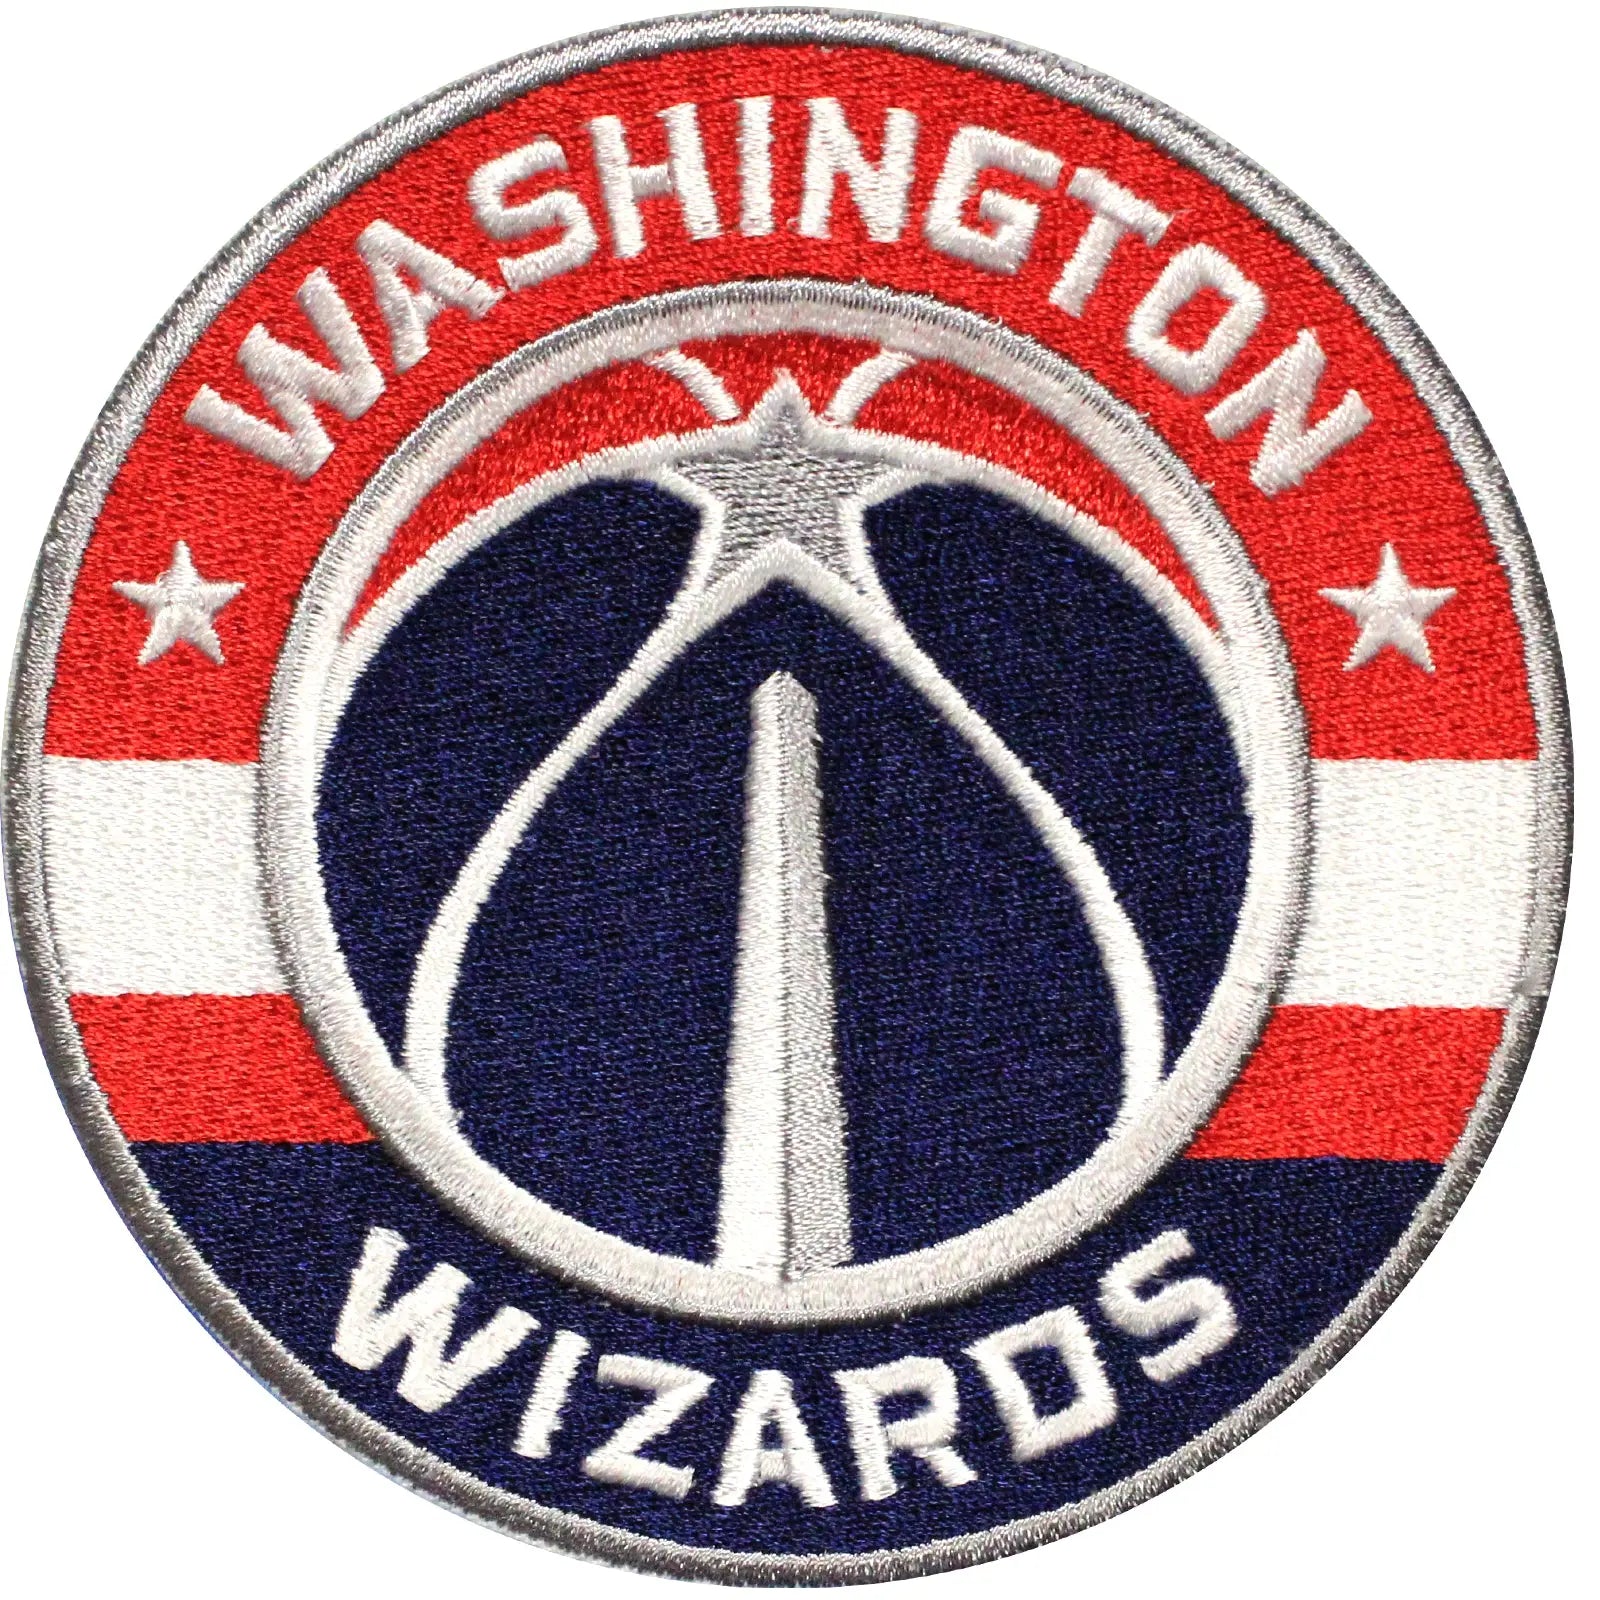 Washington Wizards Large Sticker Iron On NBA Patch 